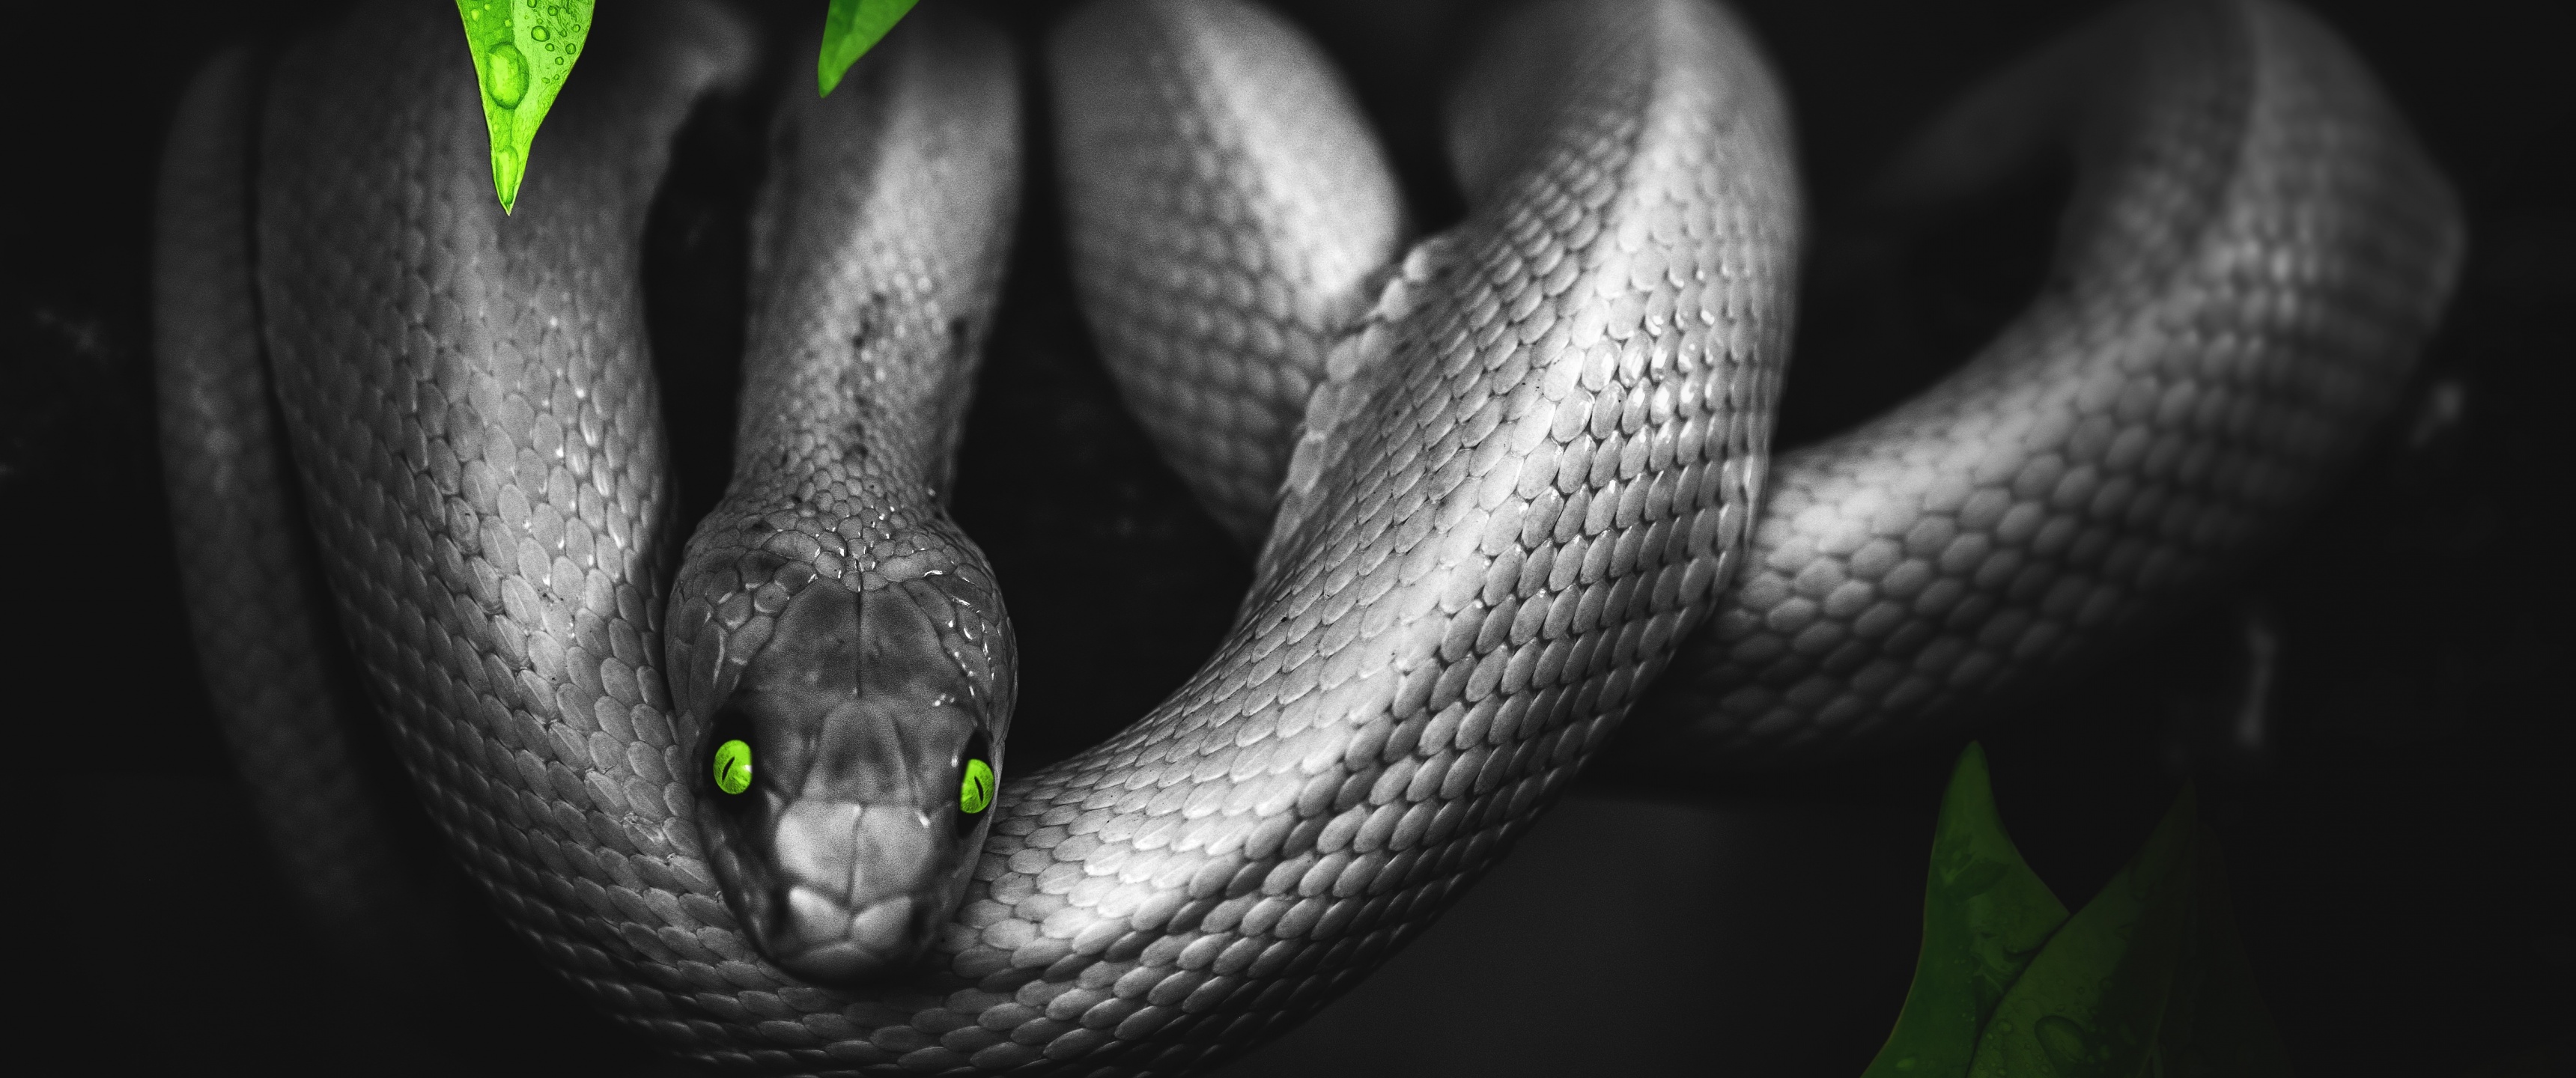 Share 56+ green snake wallpaper best - in.cdgdbentre